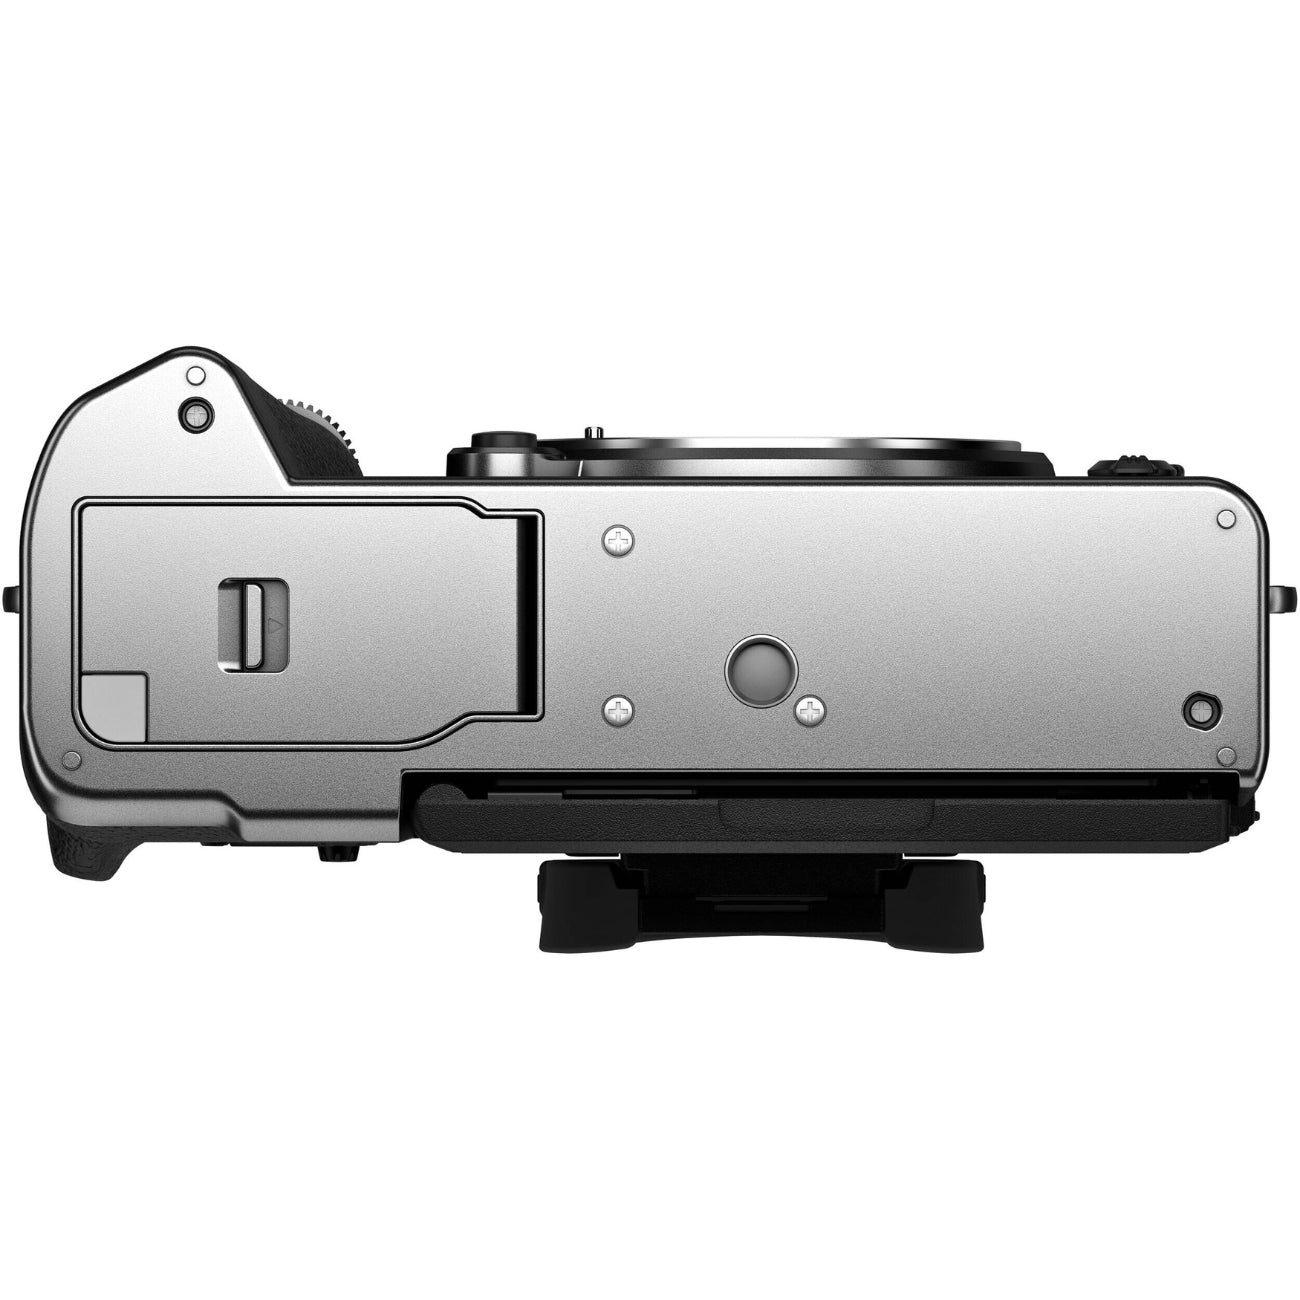 Fujifilm X-T5 Mirrorless Camera (Silver) - Bottom view